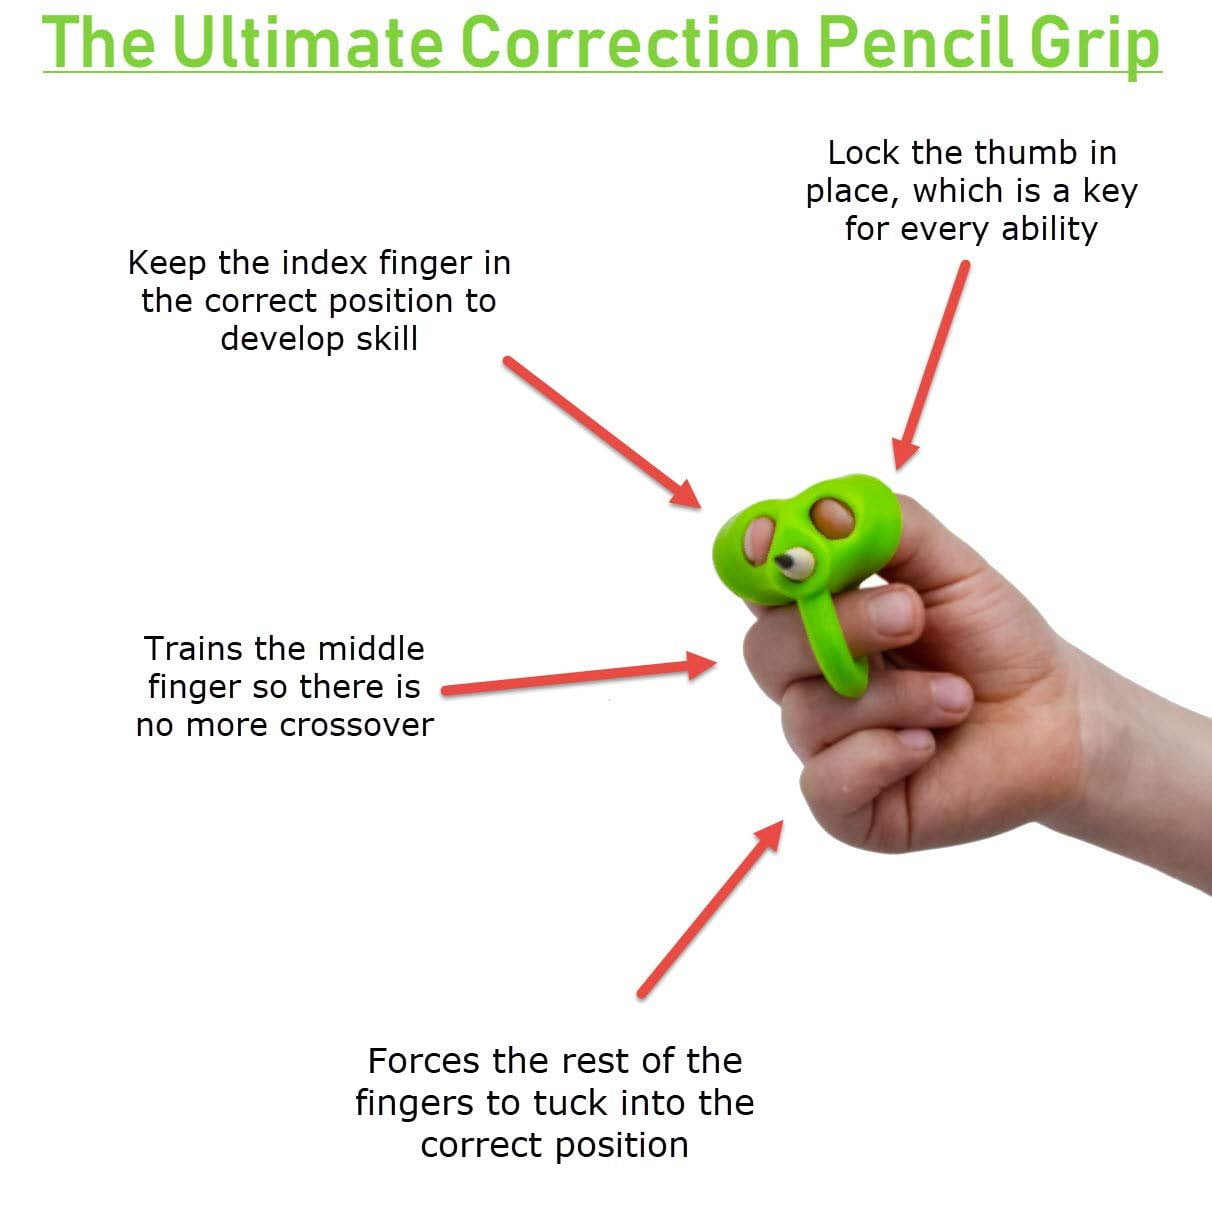 6 PACK B-KIDS Pencil Grips for Kids Handwriting OT Pen Grip 